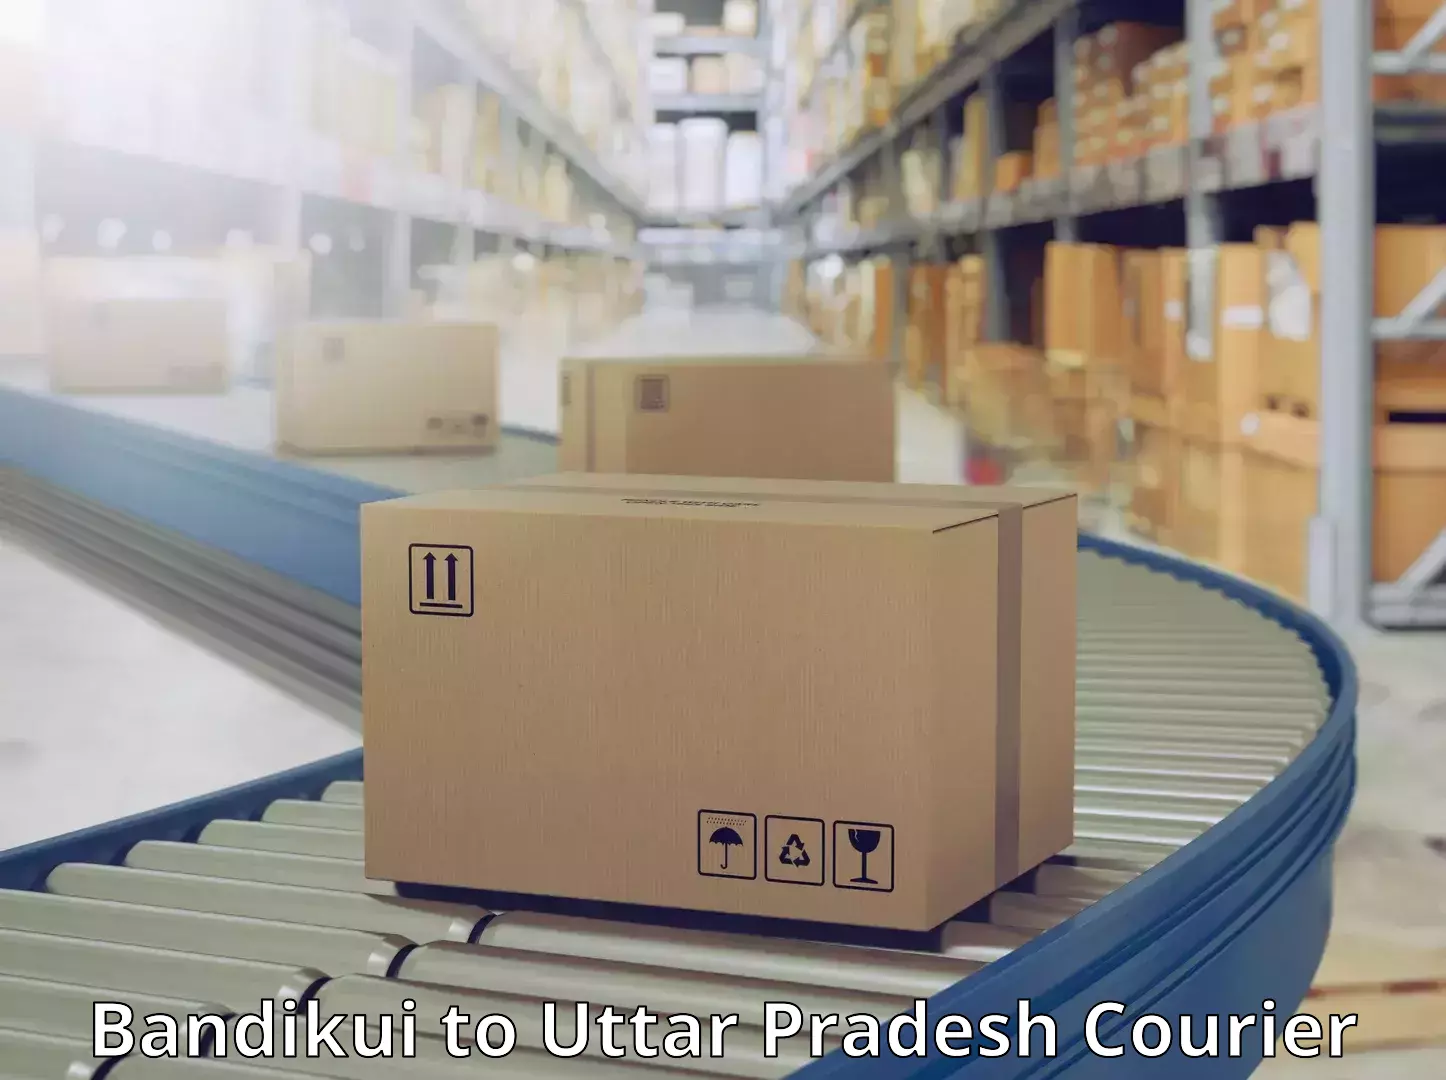 Global logistics network Bandikui to Uttar Pradesh